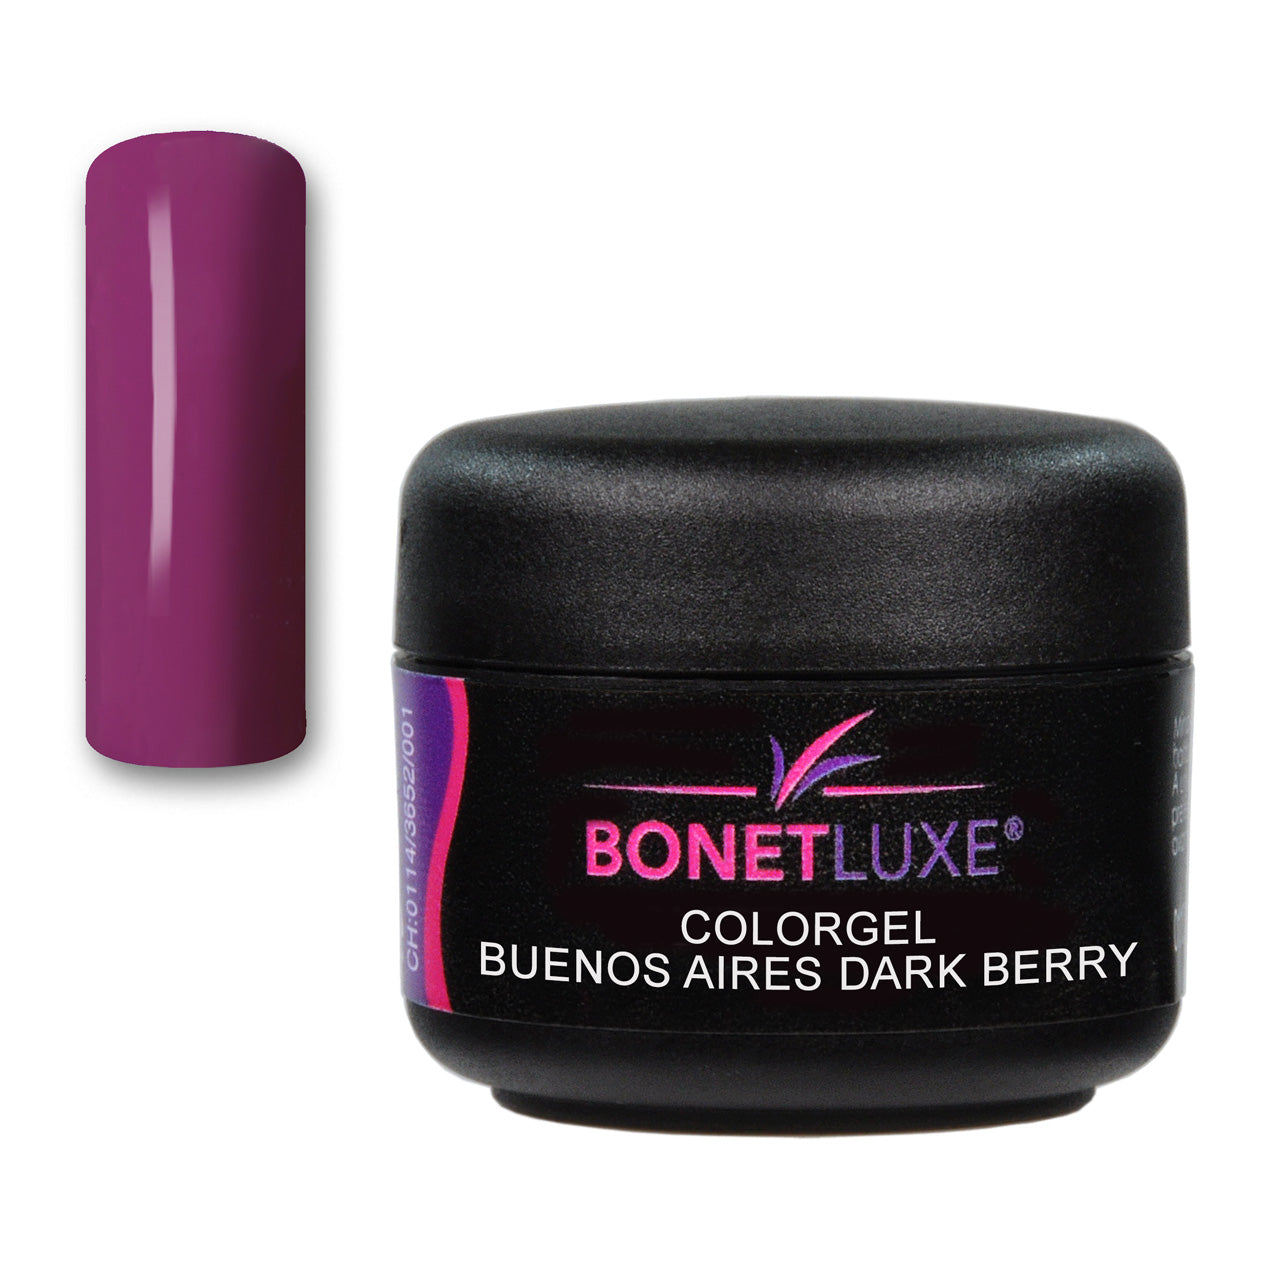 Bonetluxe Colorgel Buenos Aires Dark Berry